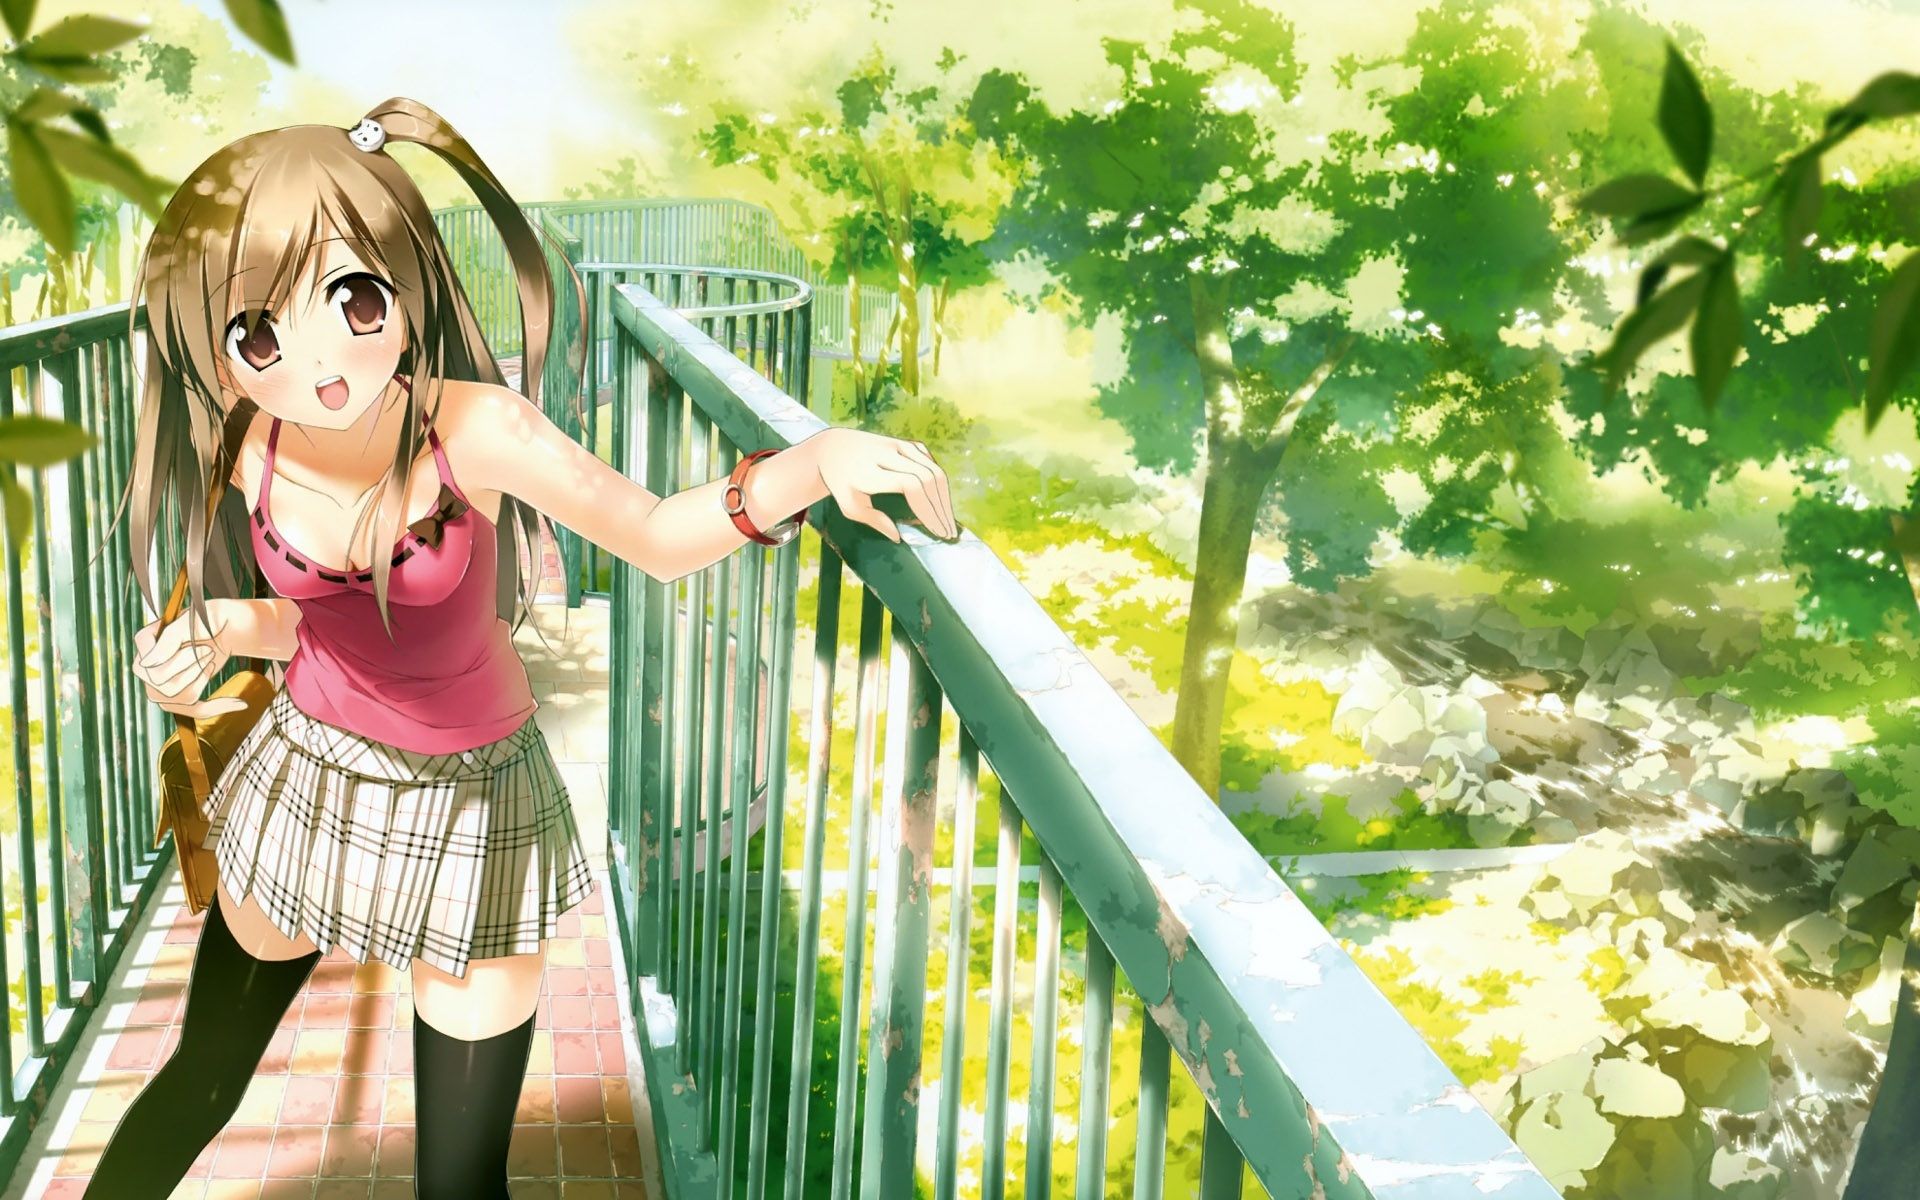 Cute Anime Girl - Anime Photo (36962631) - Fanpop